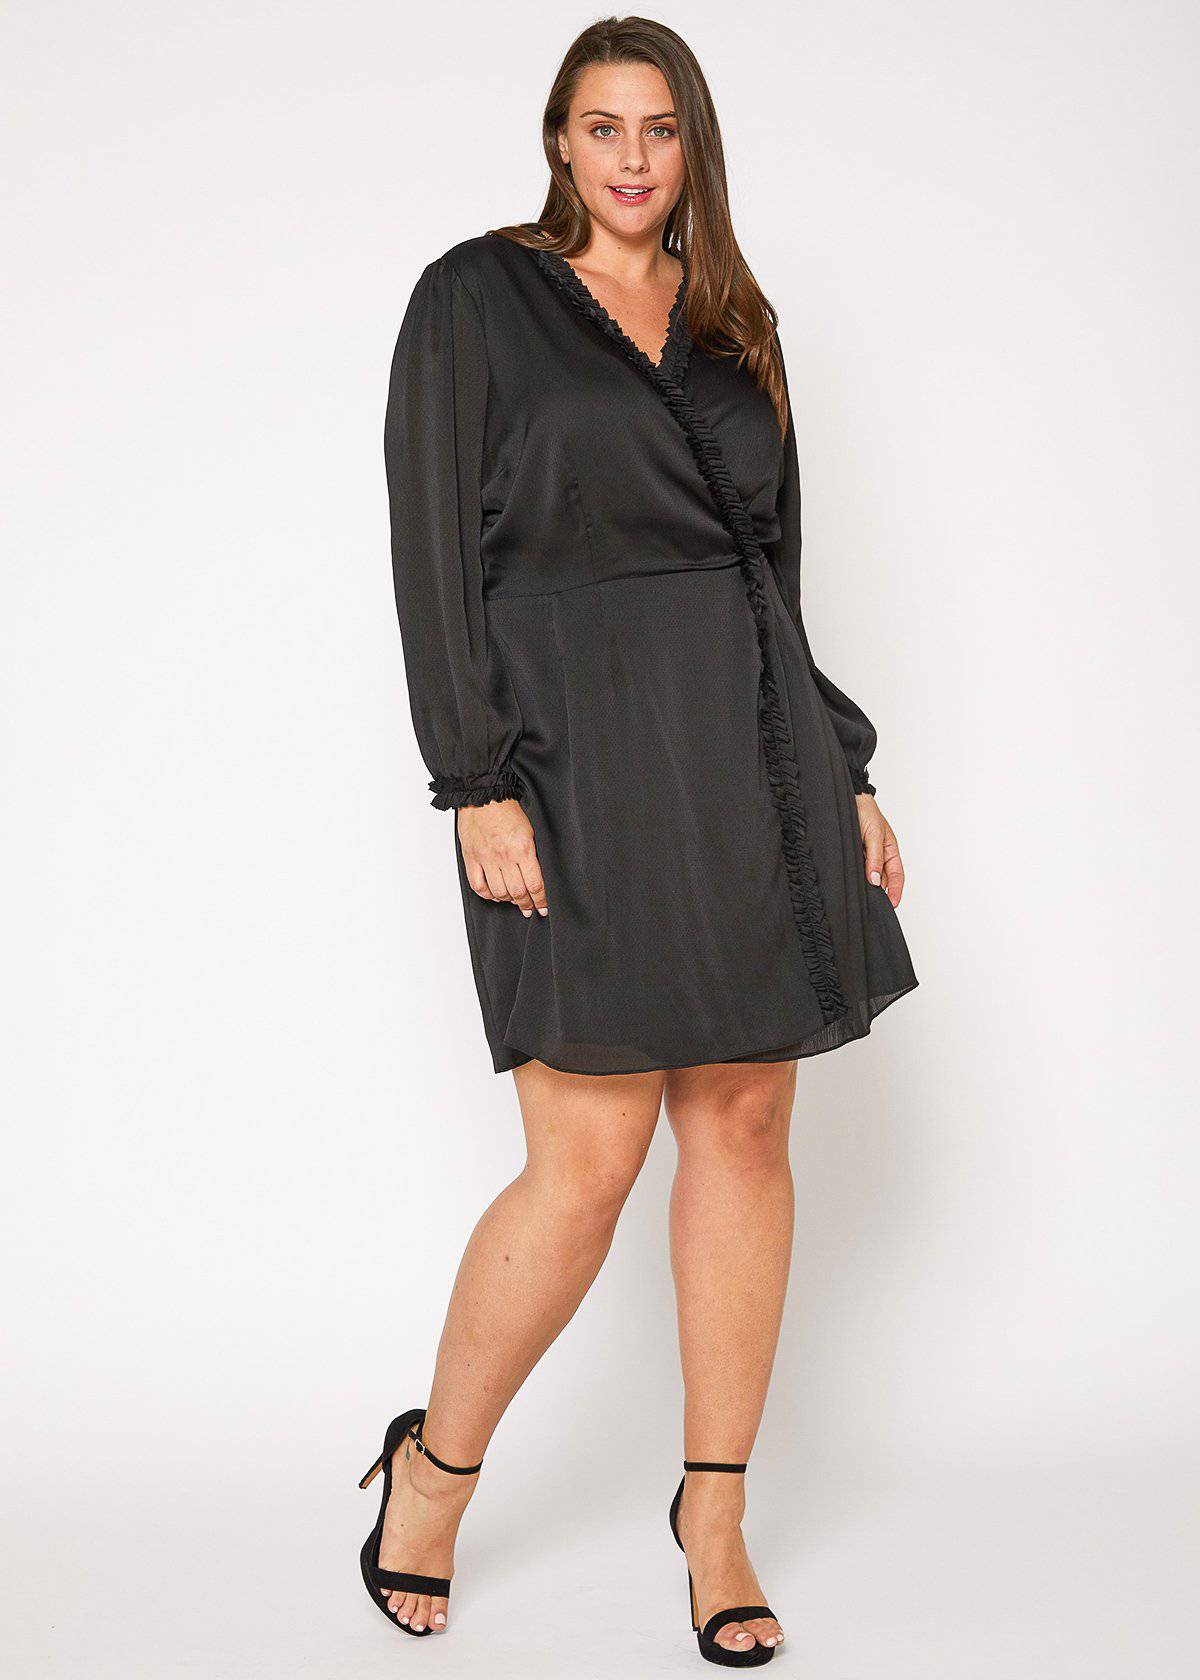 Plus Size Ruffle Trim Long Sleeve Wrap Dress in Black by Shop at Konus